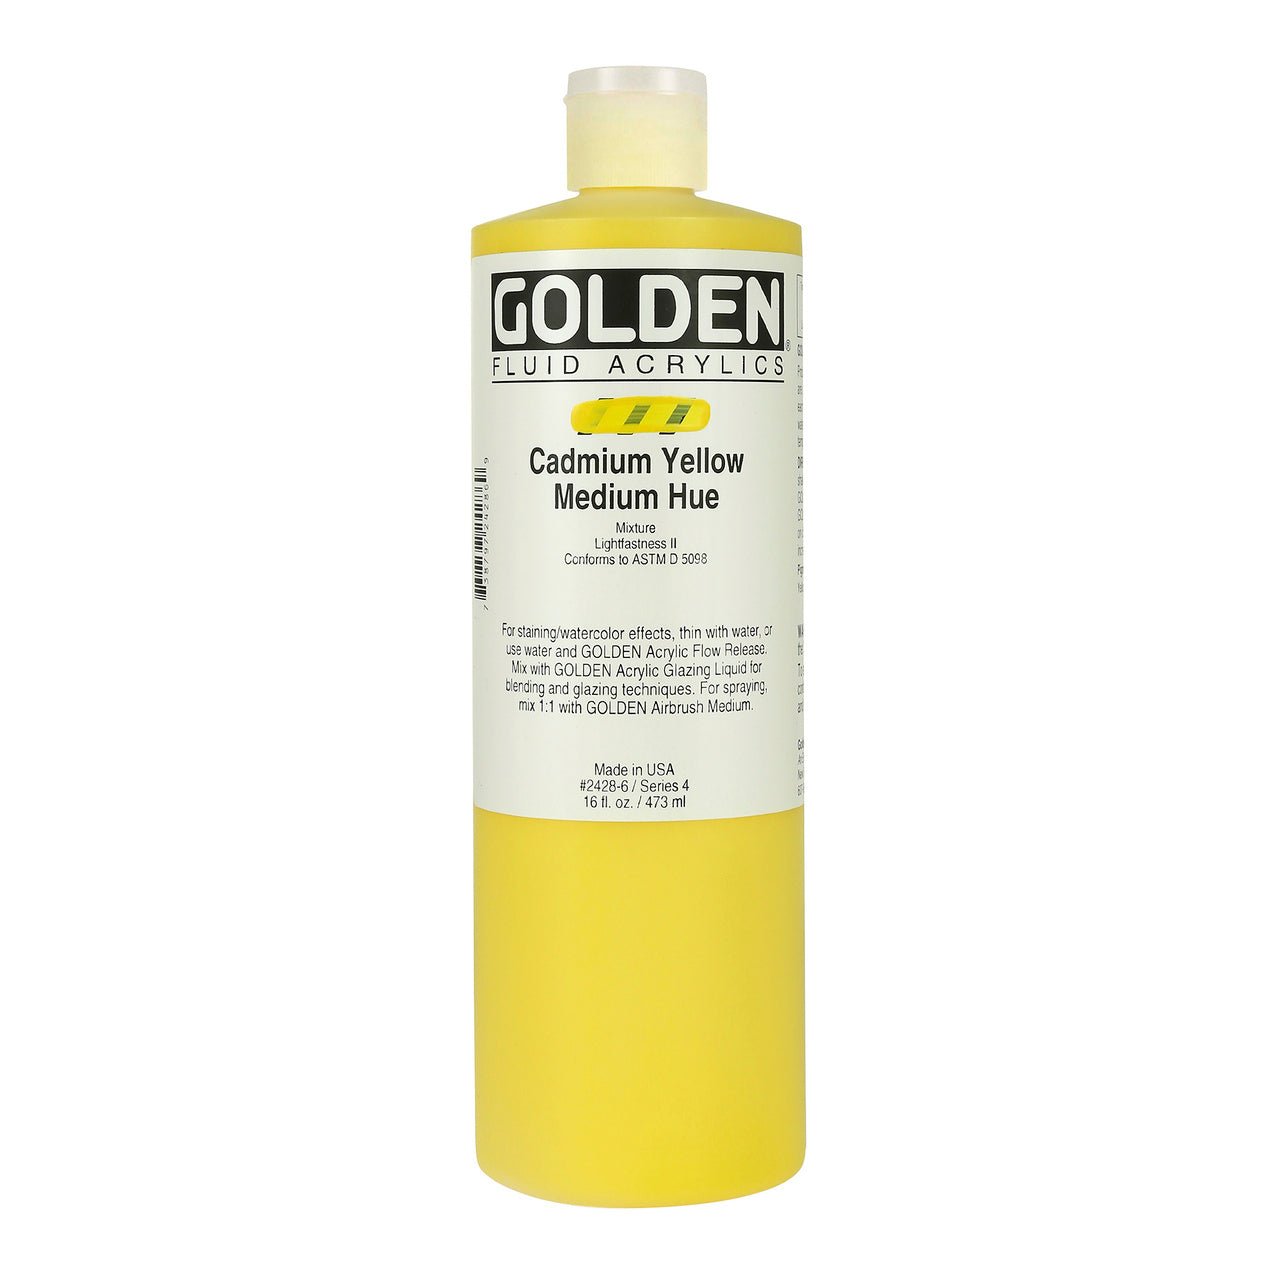 Golden Fluid Acrylic Cadmium Yellow Medium Hue 16 oz - merriartist.com